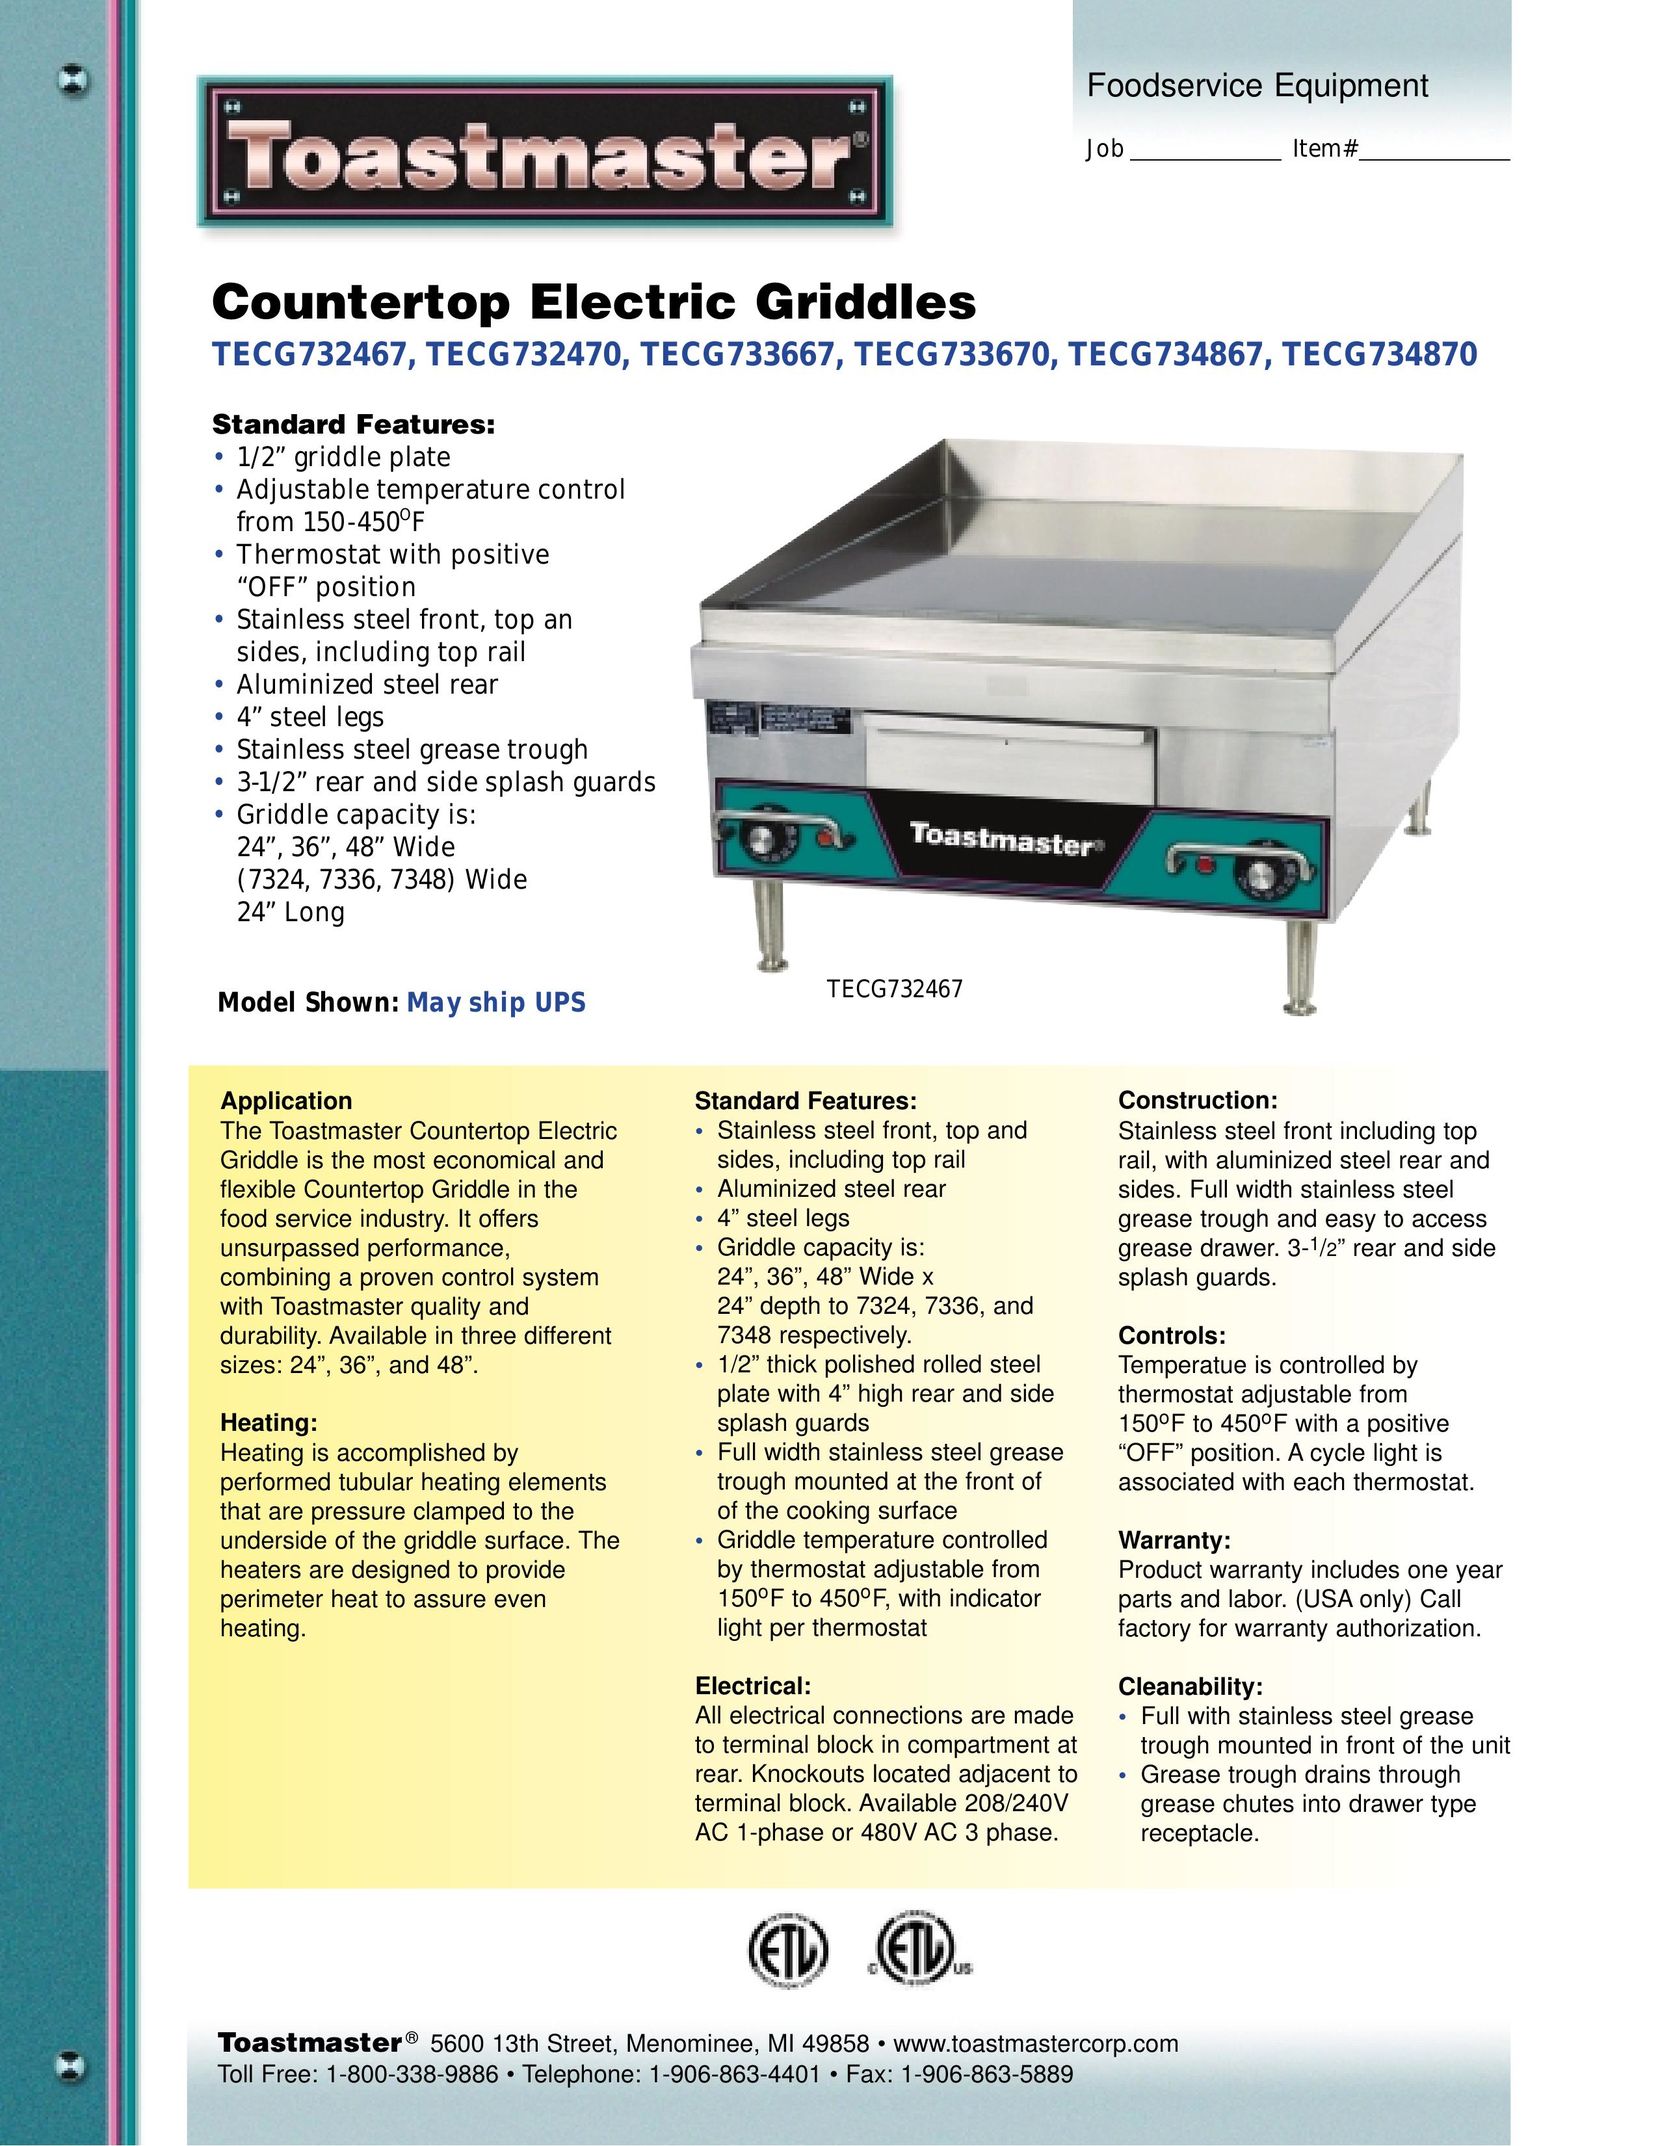 Toastmaster TECG734870 Griddle User Manual